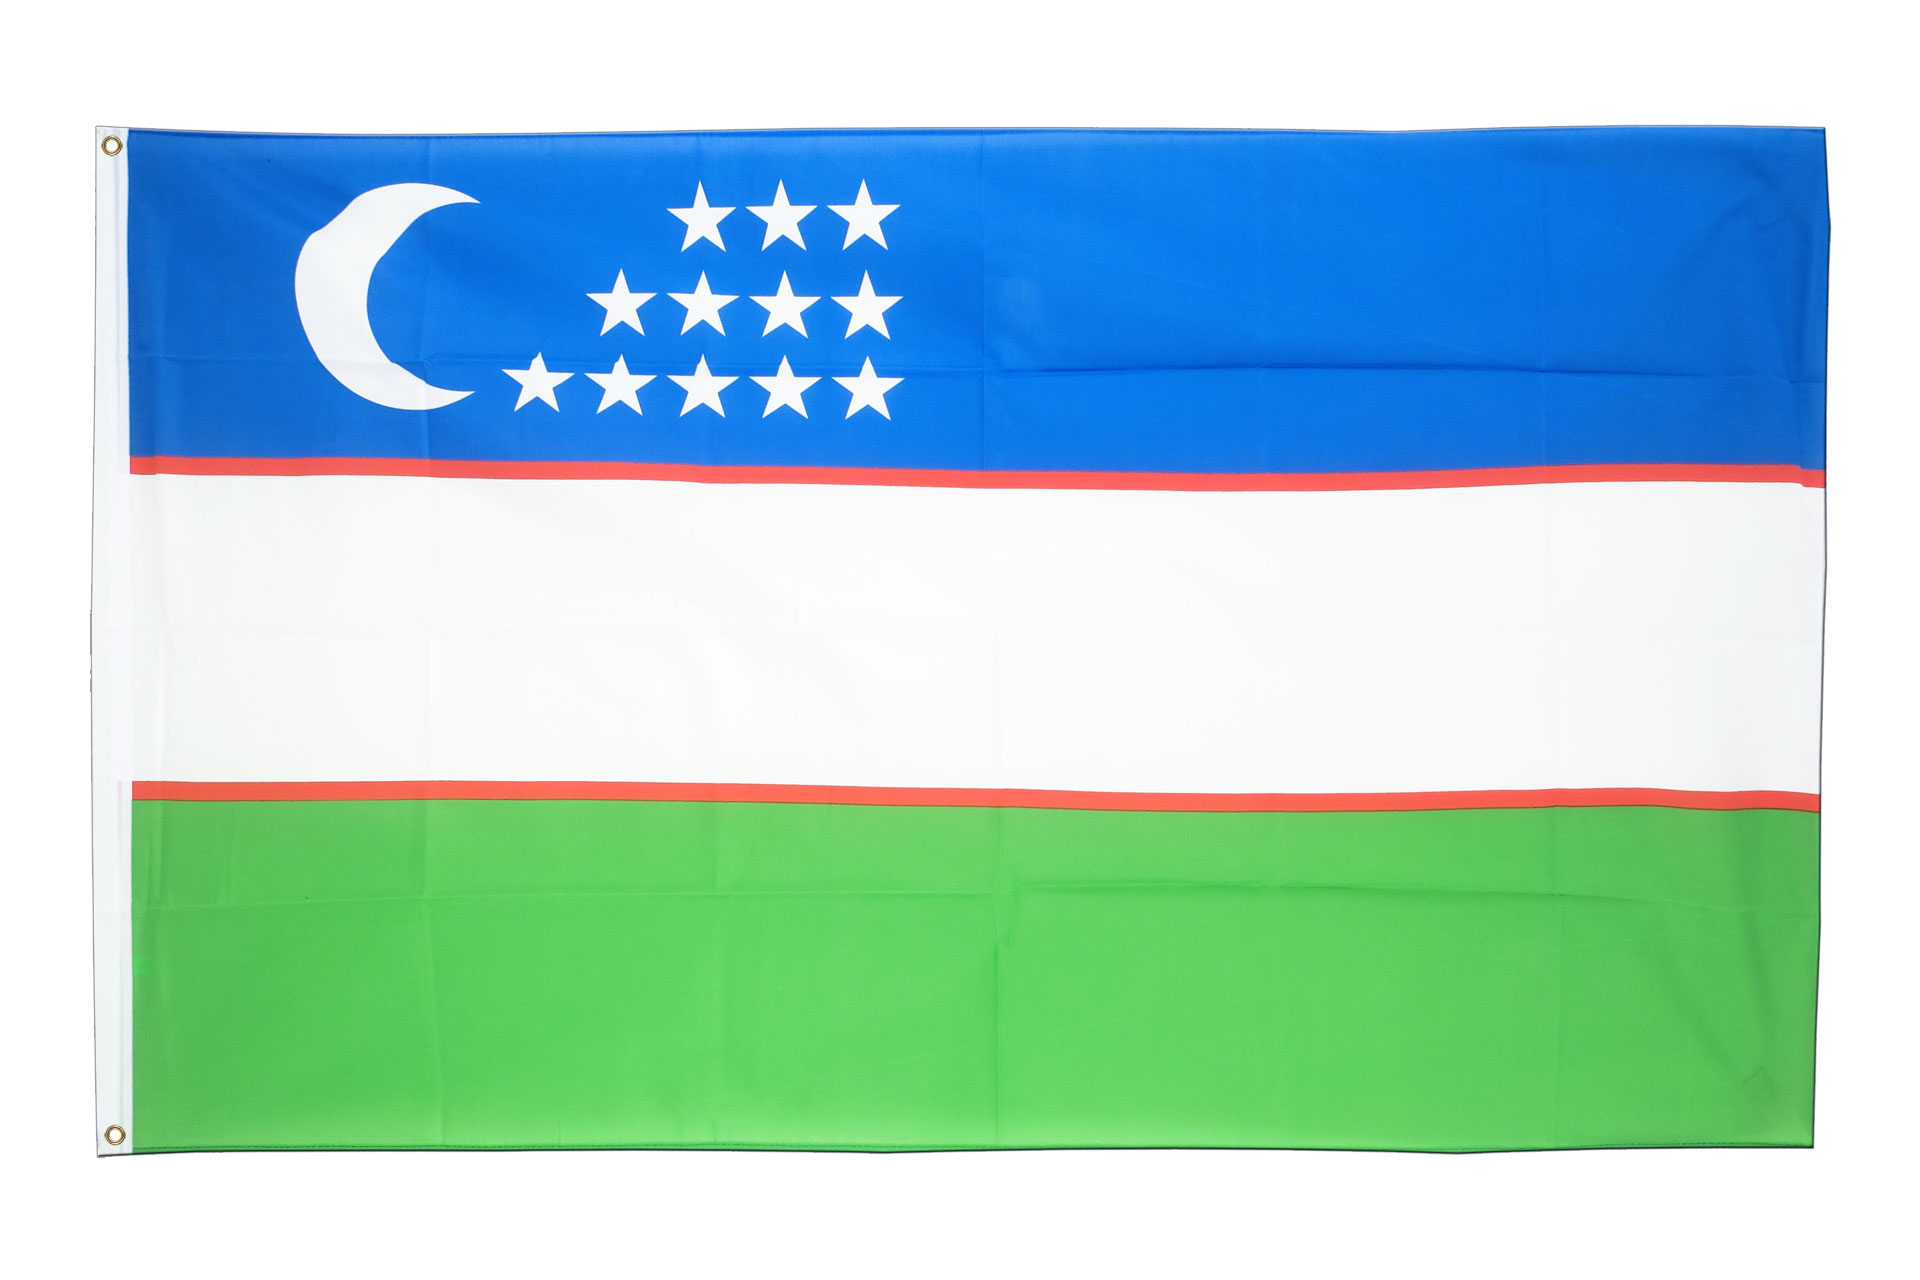 Узбекистан флаг. Флаг Узбекистана. Флаг Республики Узбекистан Штандарт. Флаг Узбекистана флаг Узбекистана. Узбеки с флагом Узбекистана.